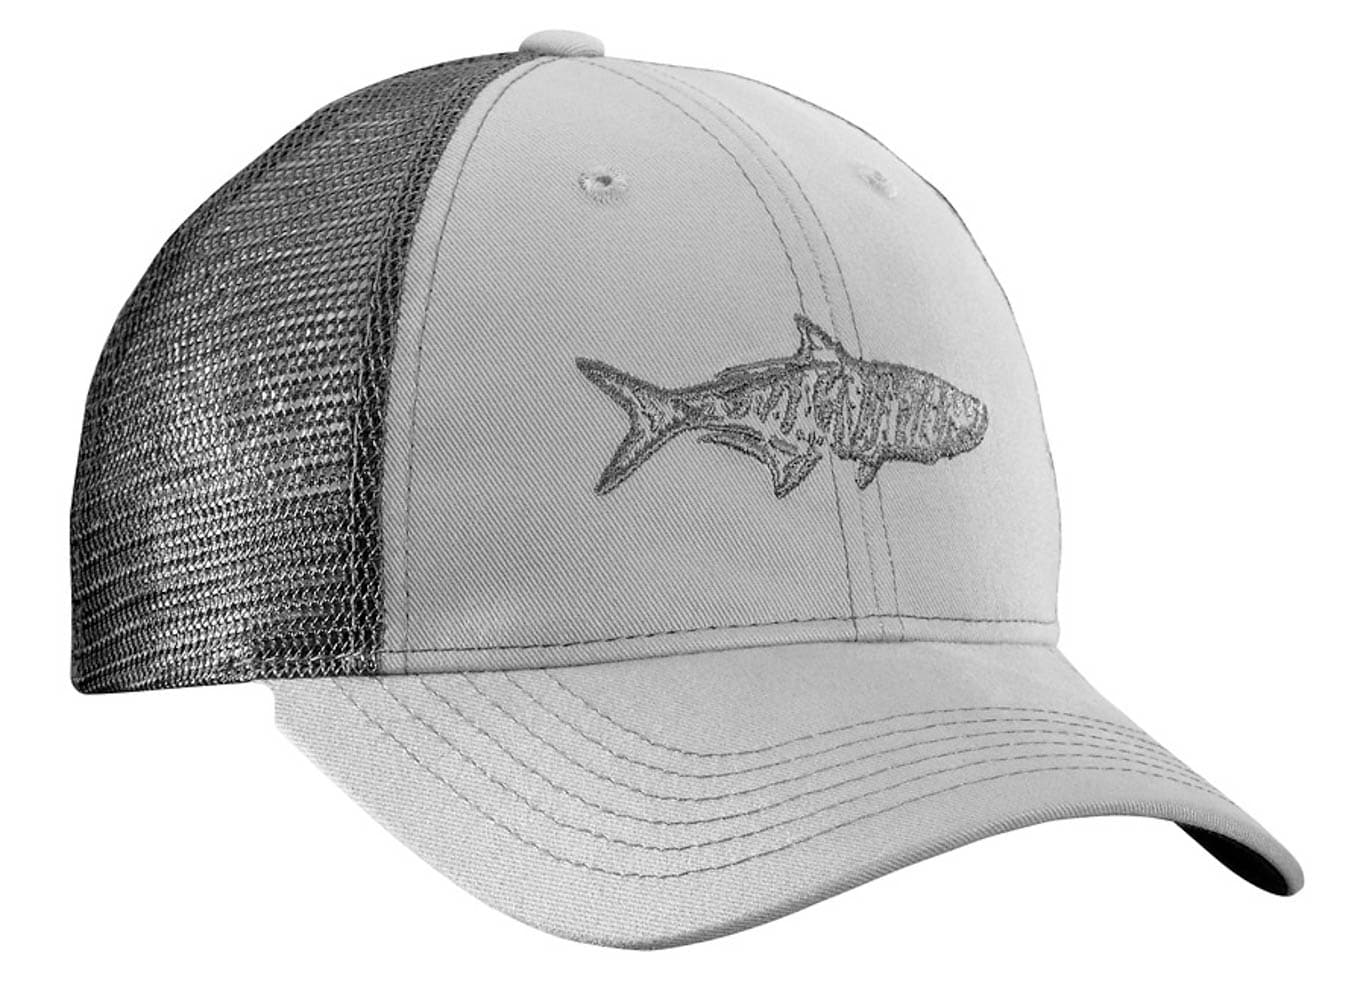 Flying Fisherman Unisex Gray/Charcoal Mesh Back Cotton Fishing Hat at